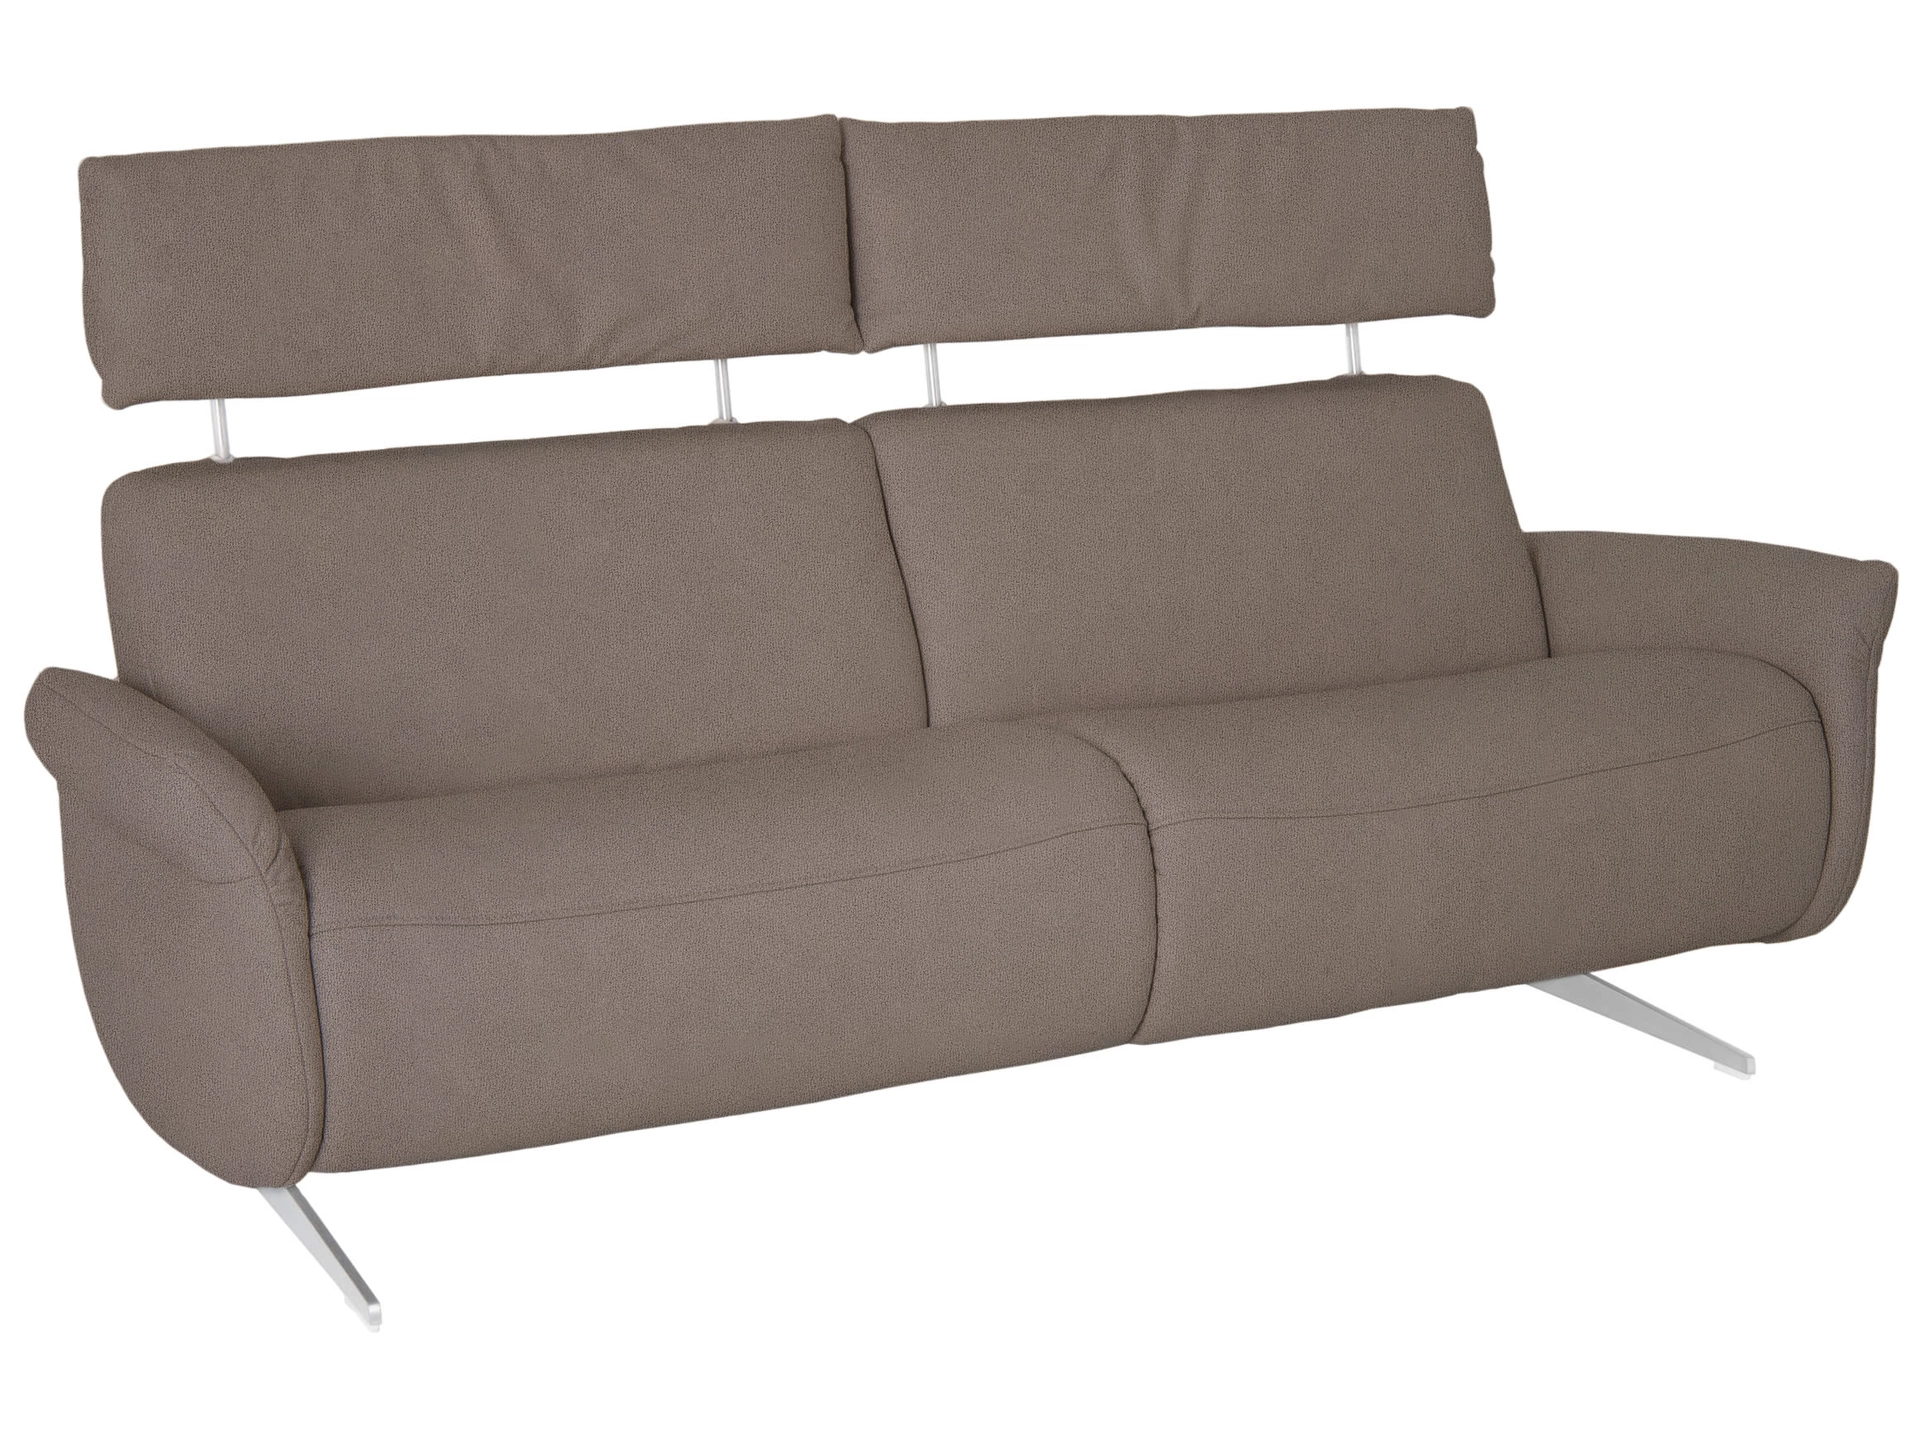 Sofa Chester Basic B: 206 cm Himolla / Farbe: Schlamm / Material: Stoff Basic